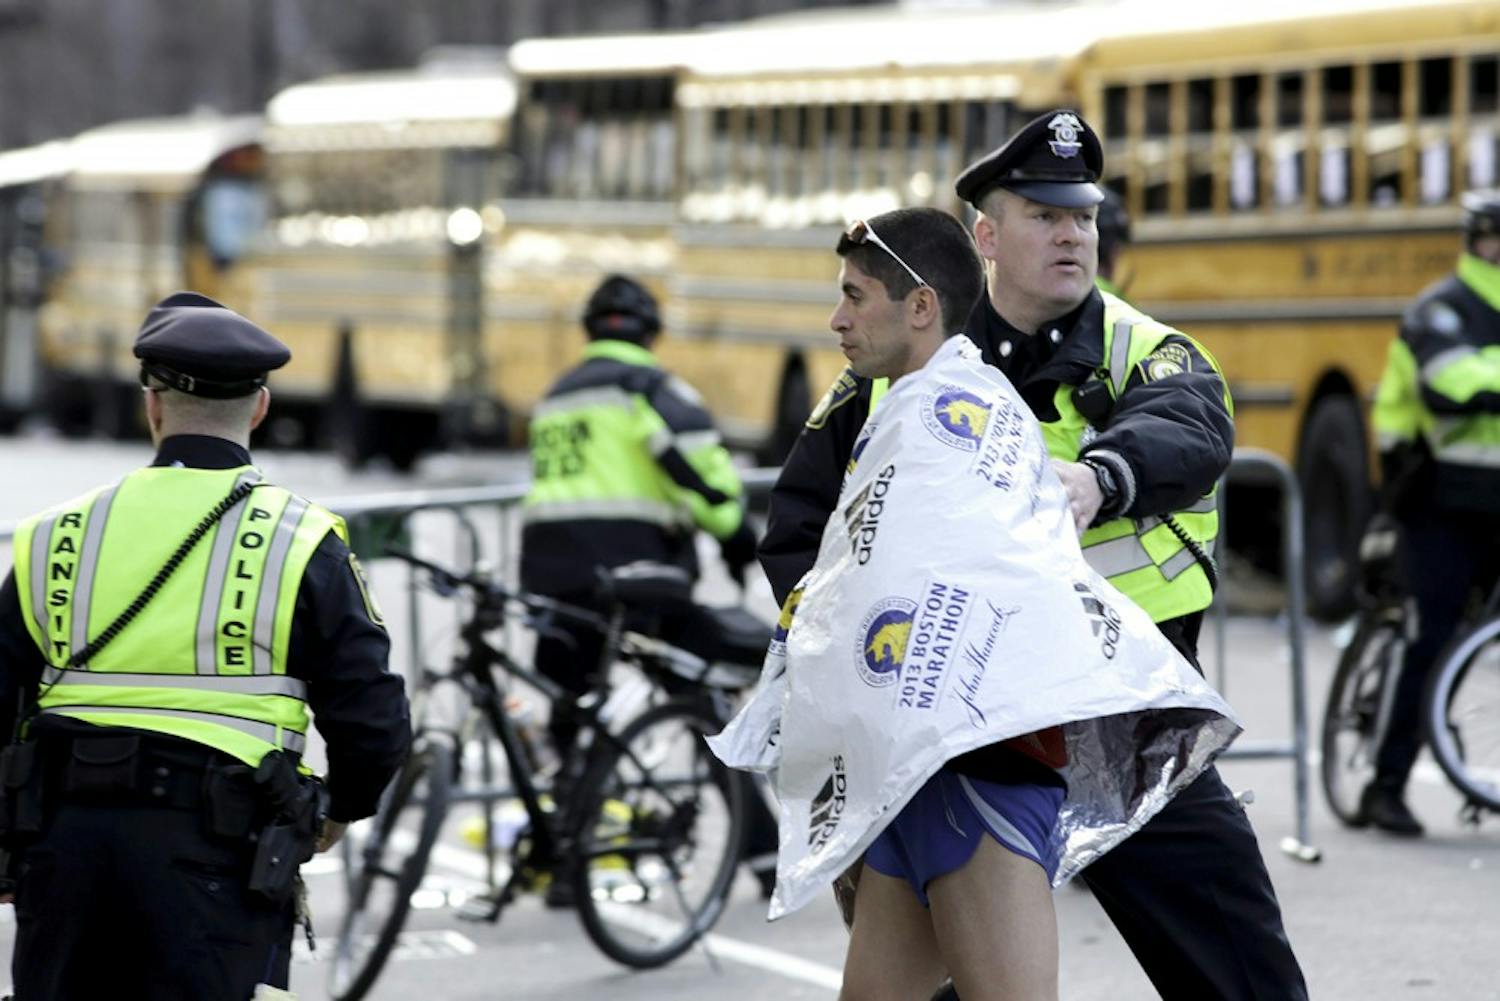 Police help a runner after multiple explosions rocked the finish line of the Boston Marathon on Monday, April 15, 2013, in Boston, Massachusetts. (Nicolaus Czarnecki/Zuma Press/MCT)